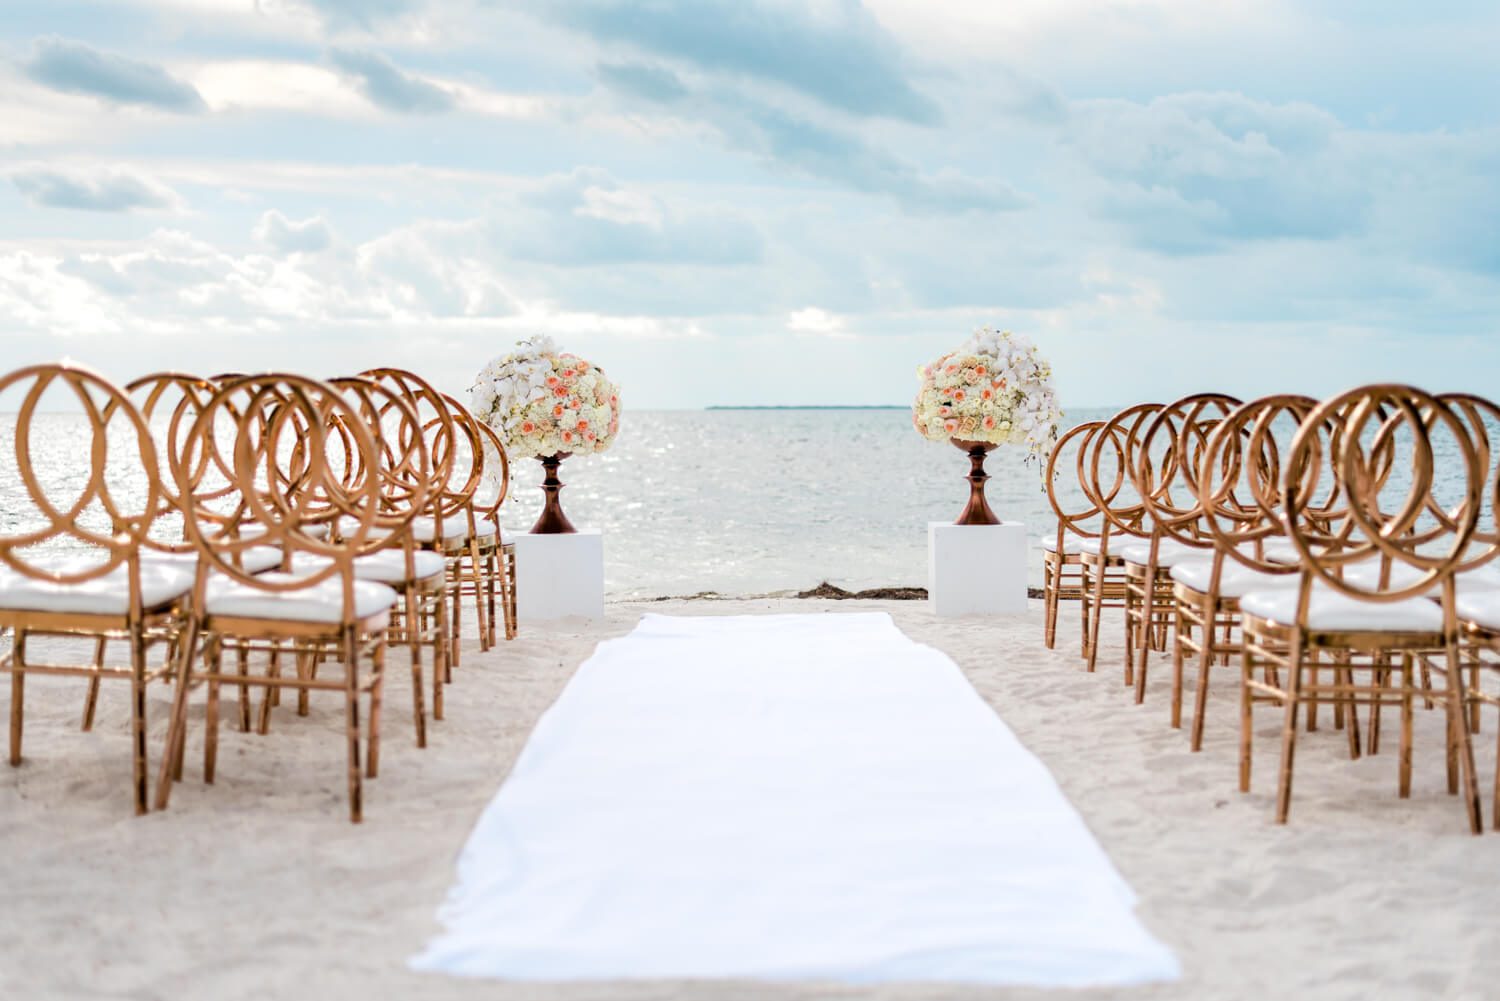 A Florida Keys wedding ceremony set up on the beach.